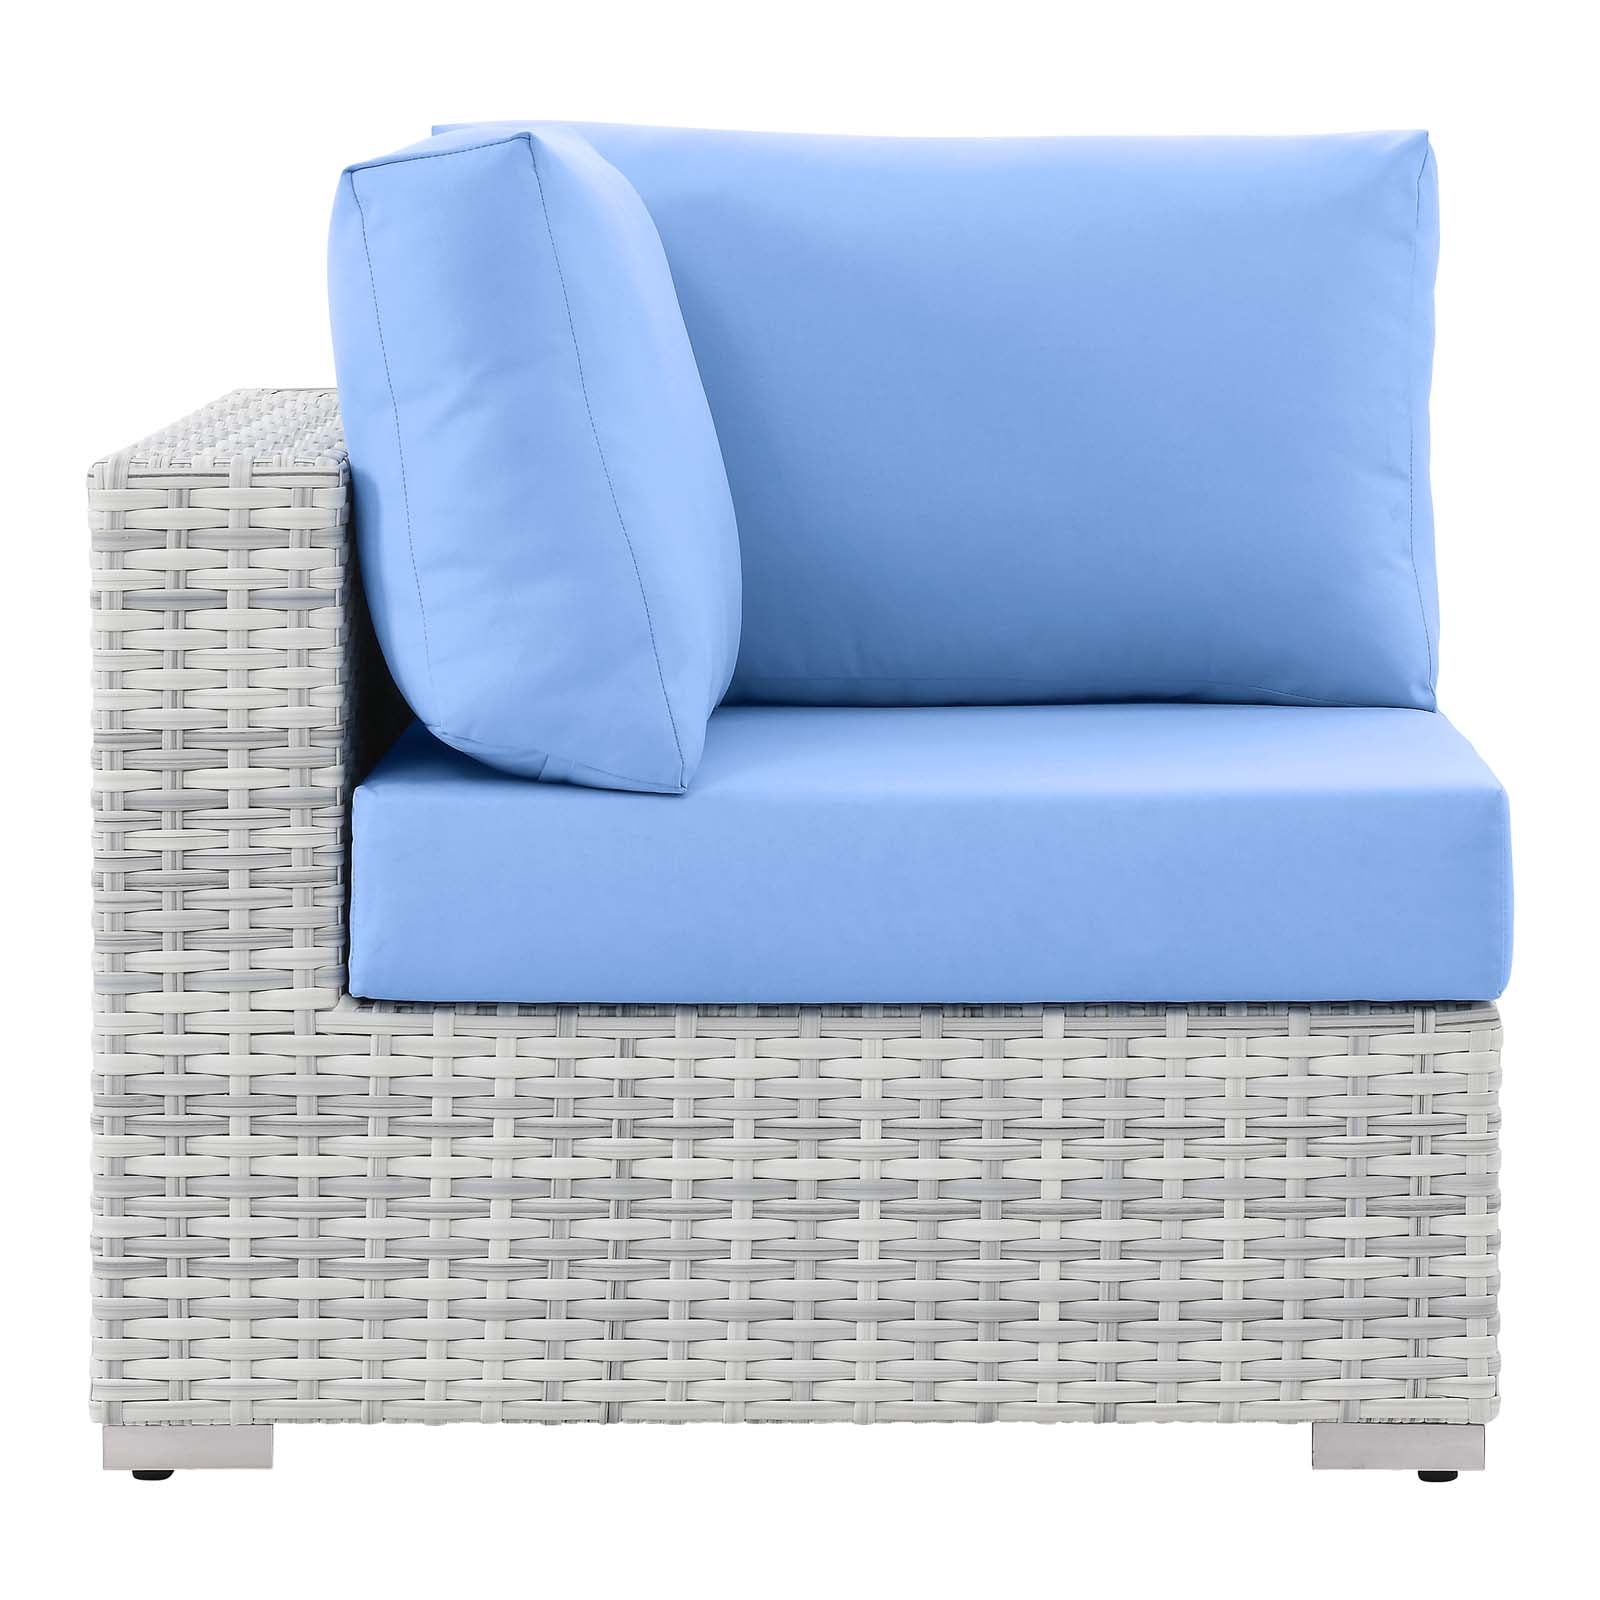 Convene Outdoor Patio Corner Chair - East Shore Modern Home Furnishings